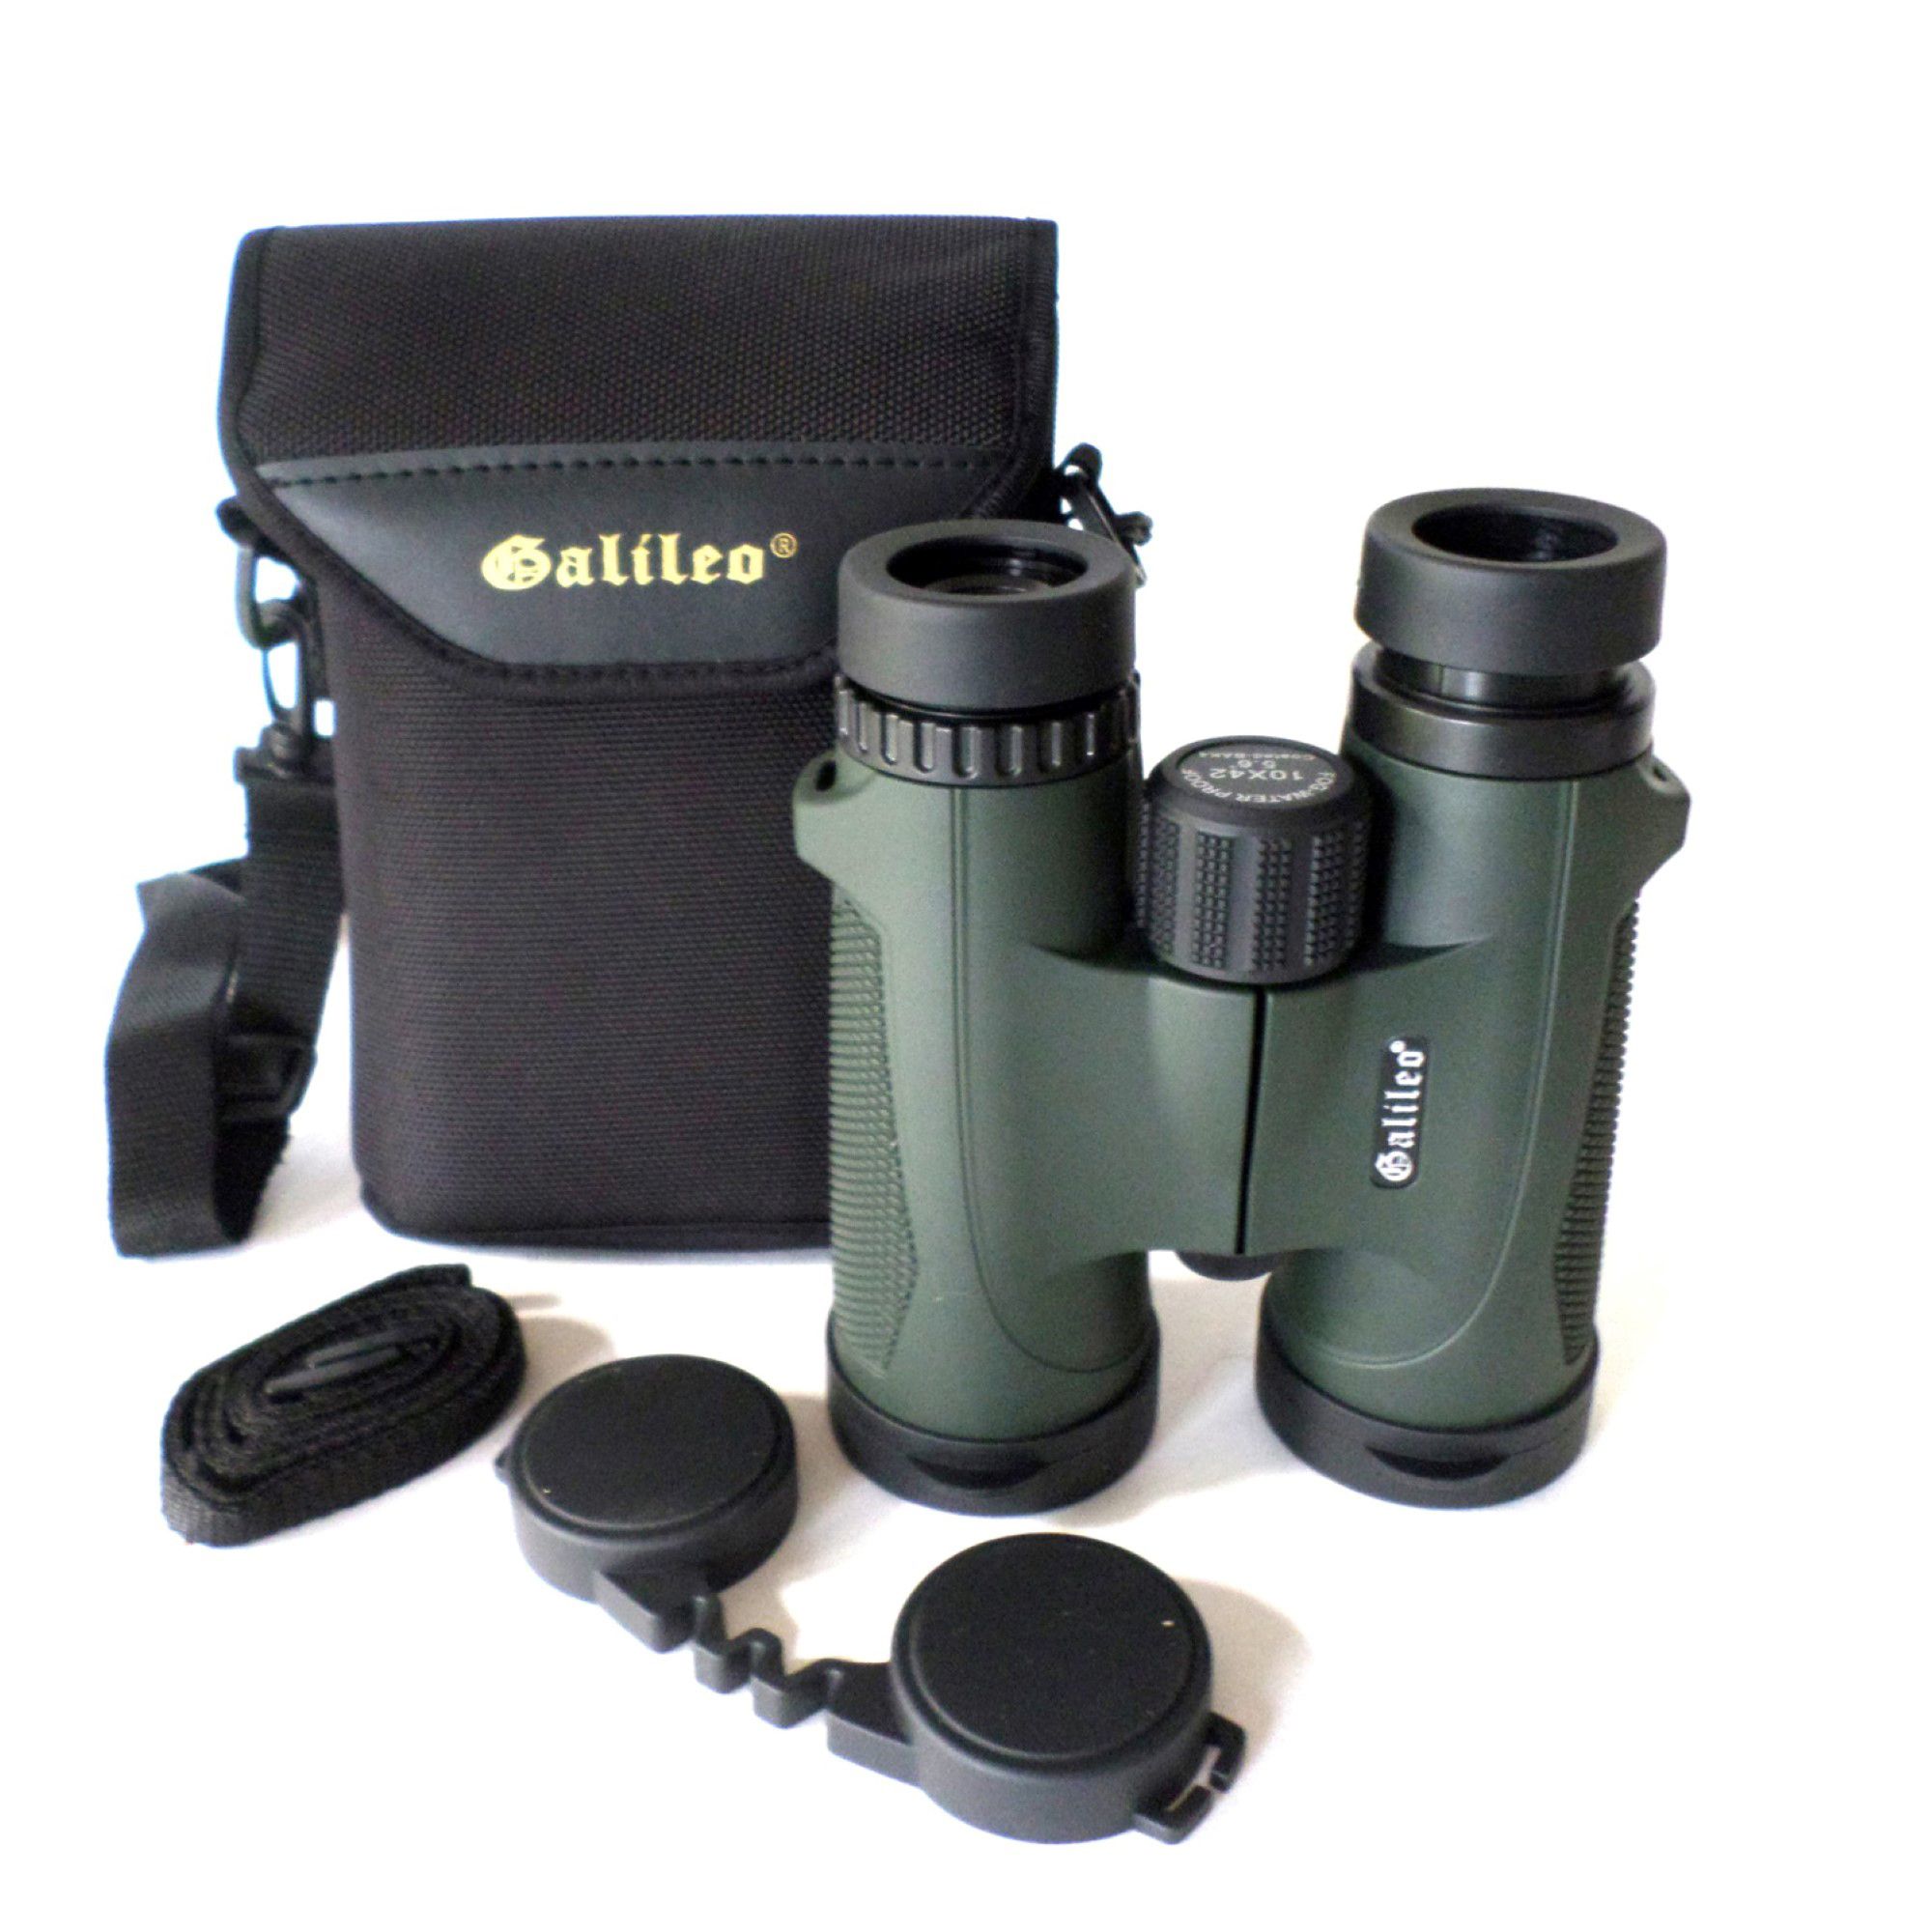 Galileo 12x 42mm Waterproof Binoculars